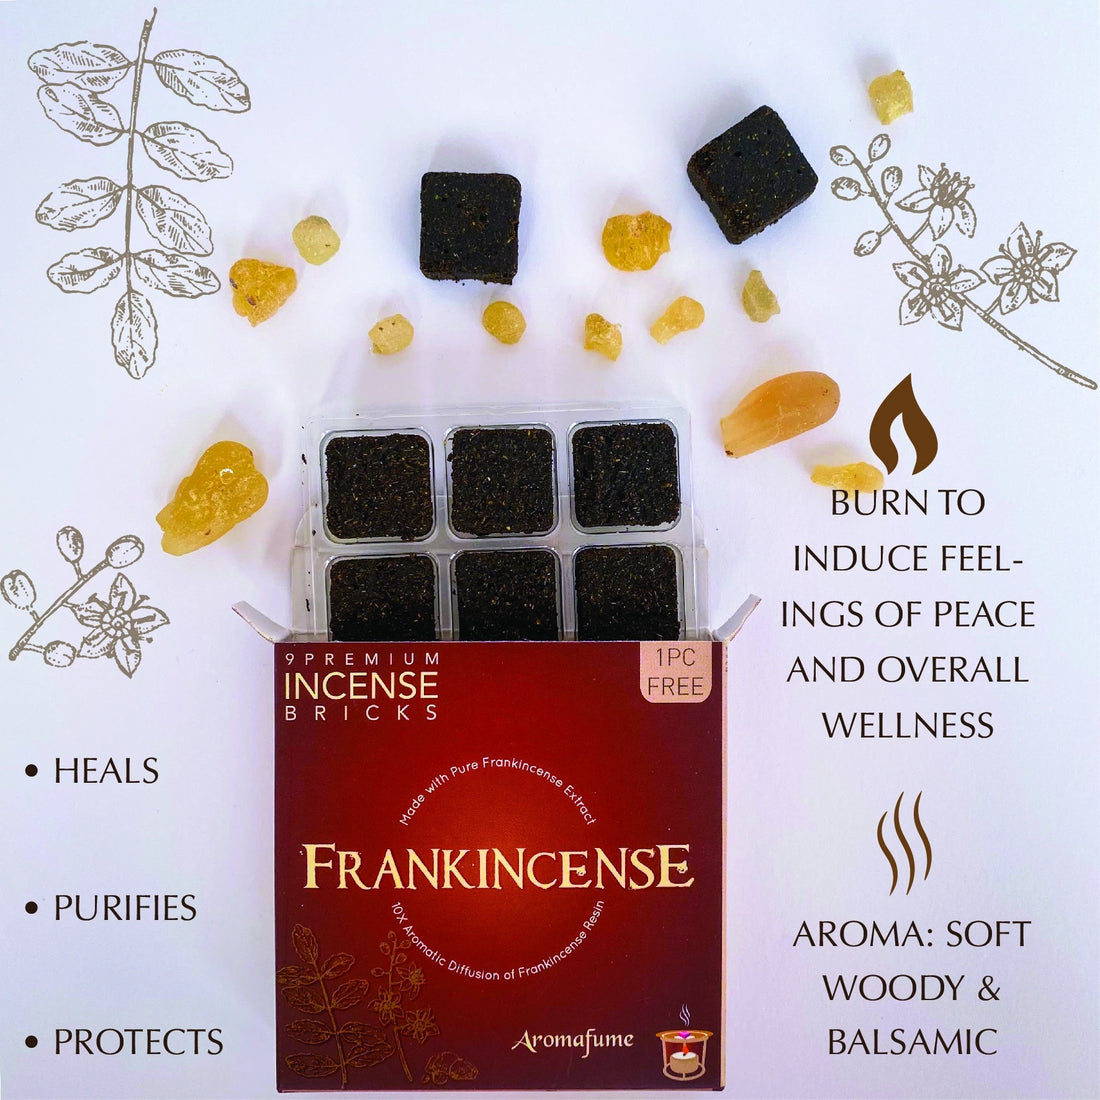 Frankincense Aromafume Incense Bricks-secret sense